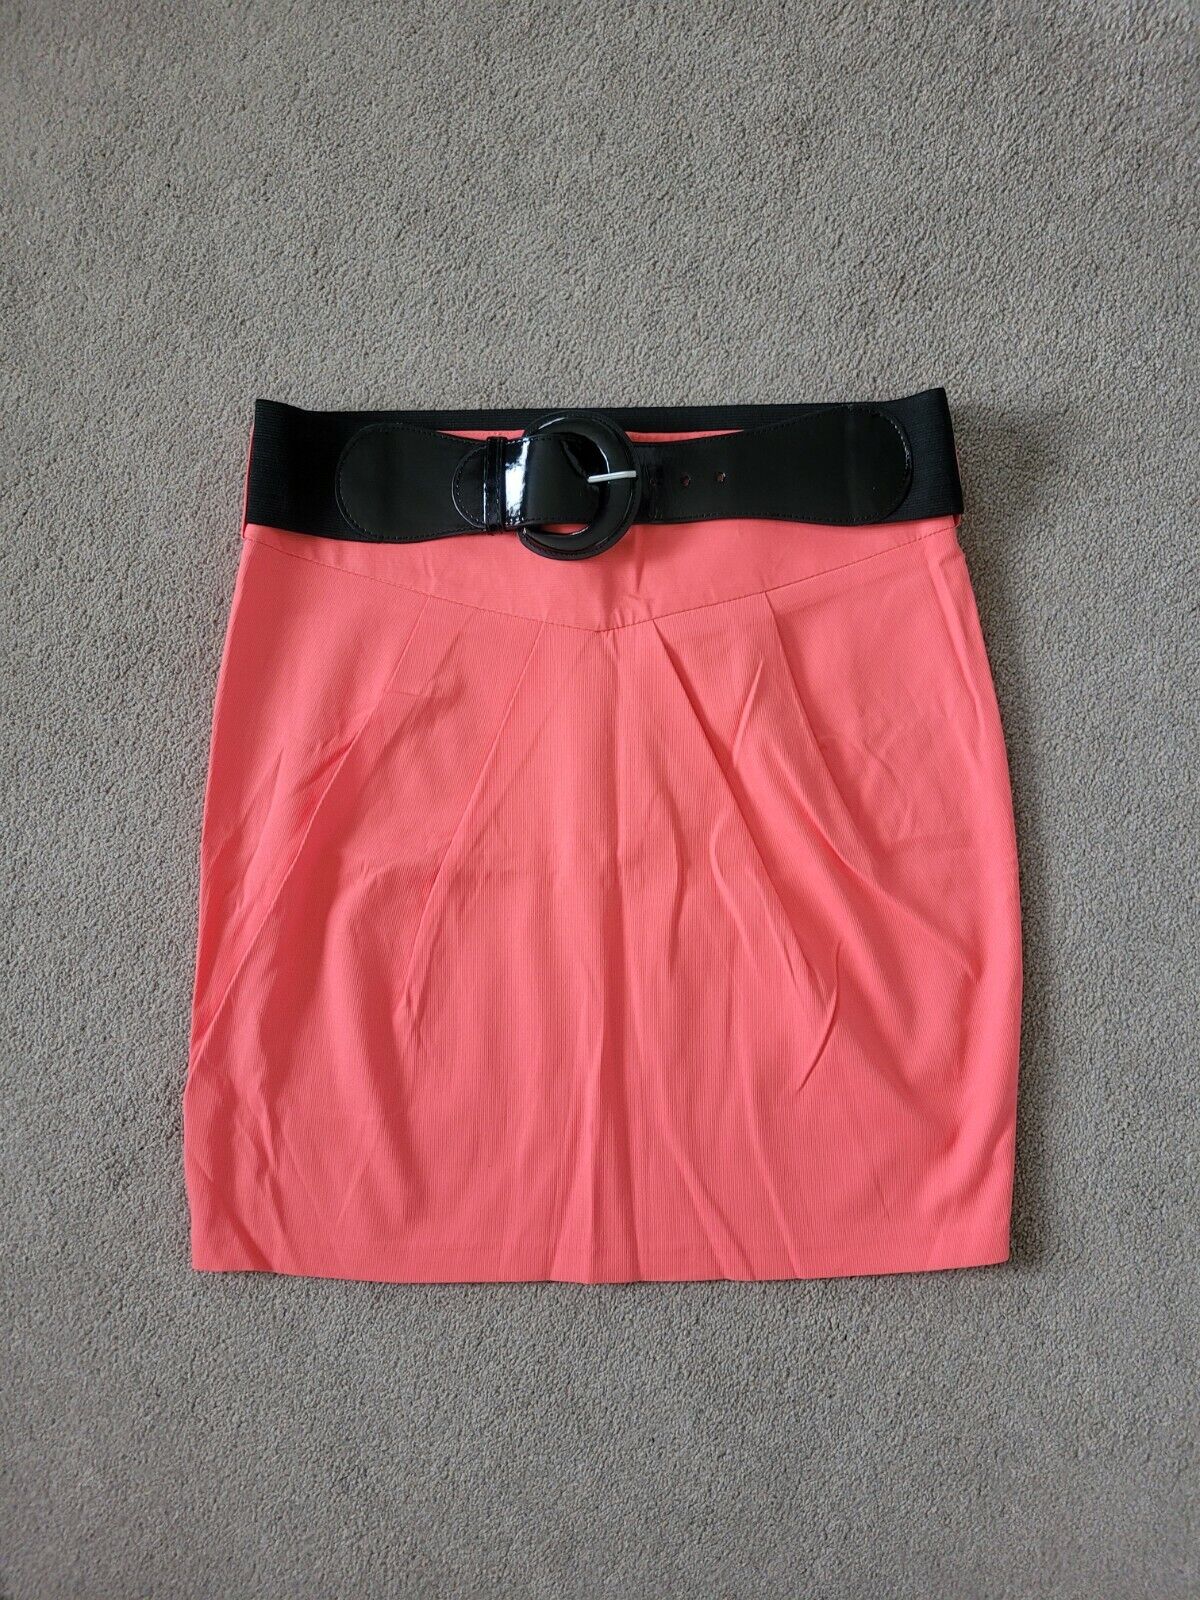 Ladies Jane Norman Beauty products Coral Orange Tulip Si Mini Belt & Reservation Short Skirt